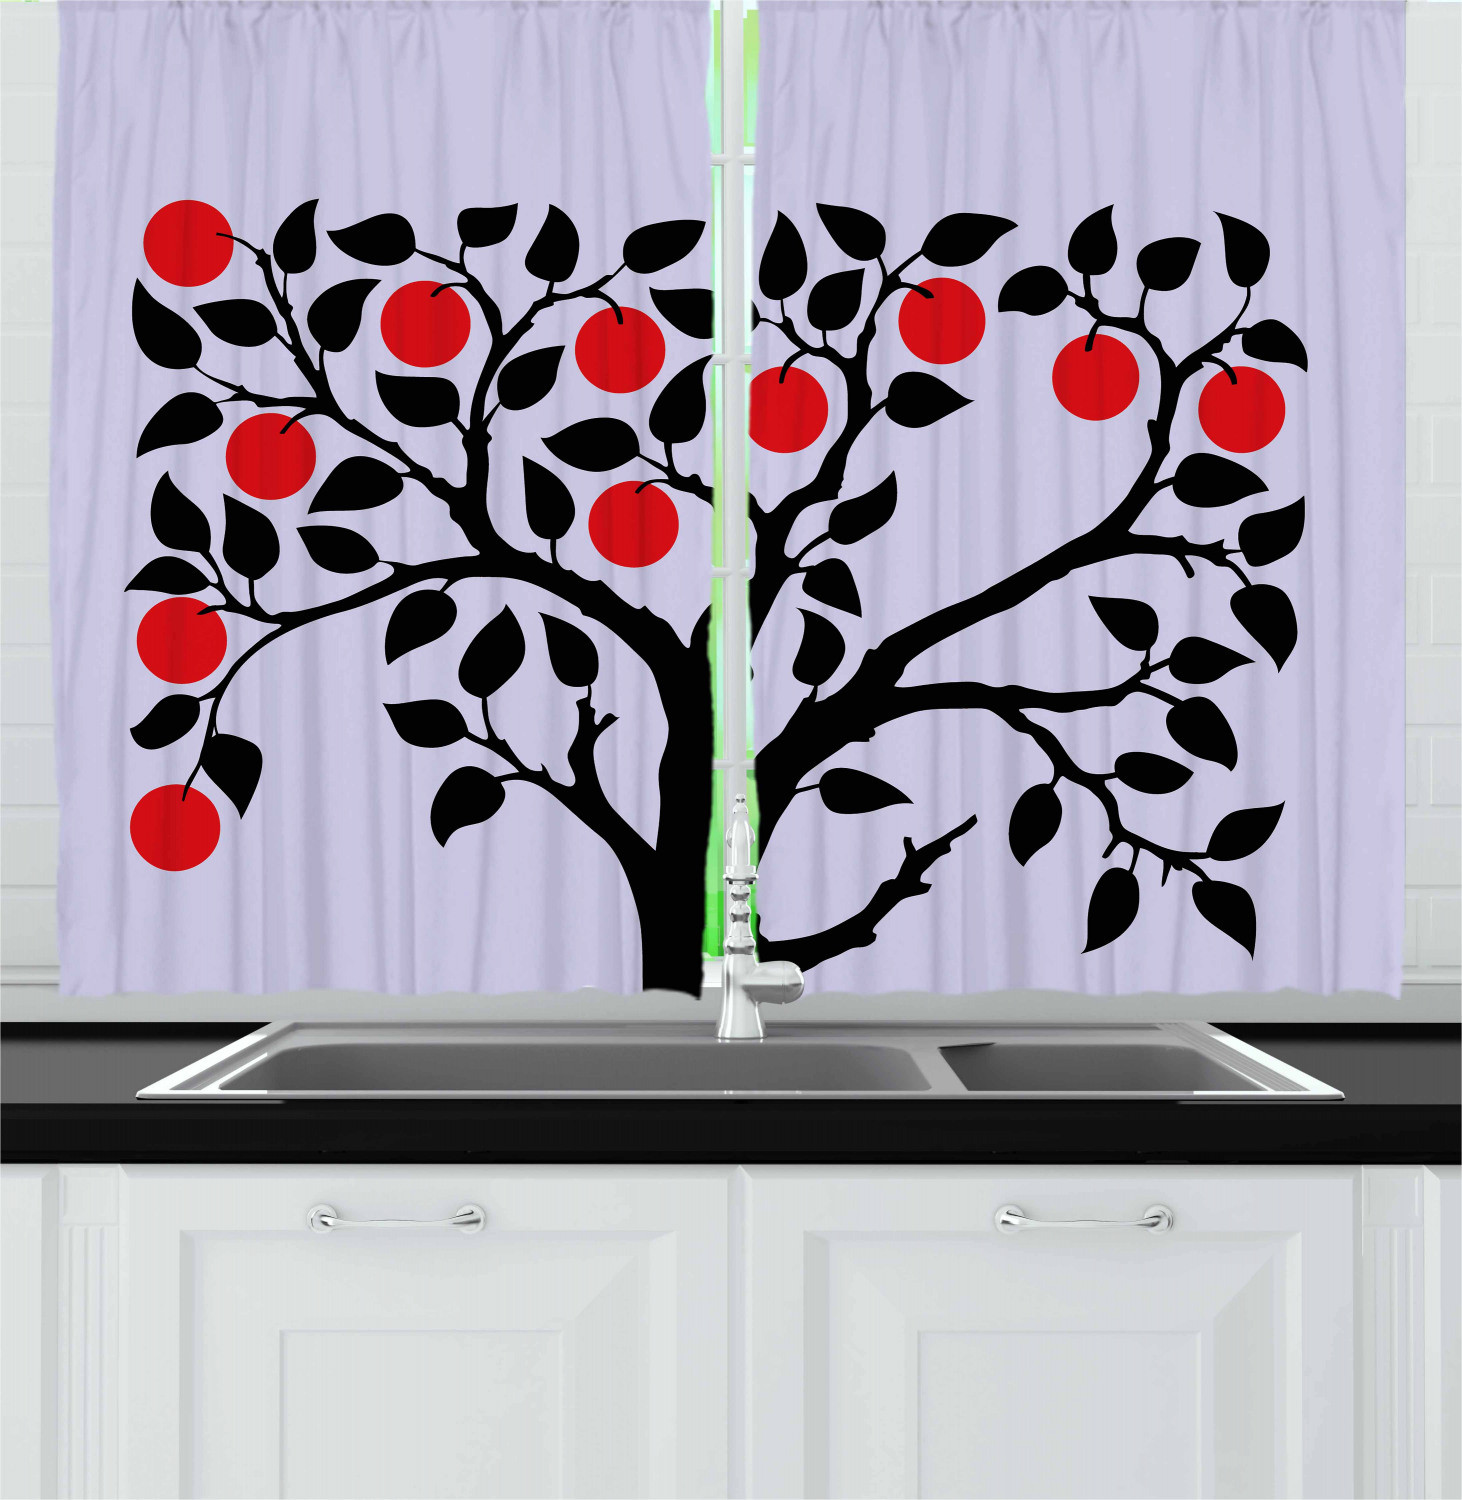 Fruit Kitchen Curtain
 Apple Fruit Kitchen Curtains 2 Panel Set Window Drapes 55